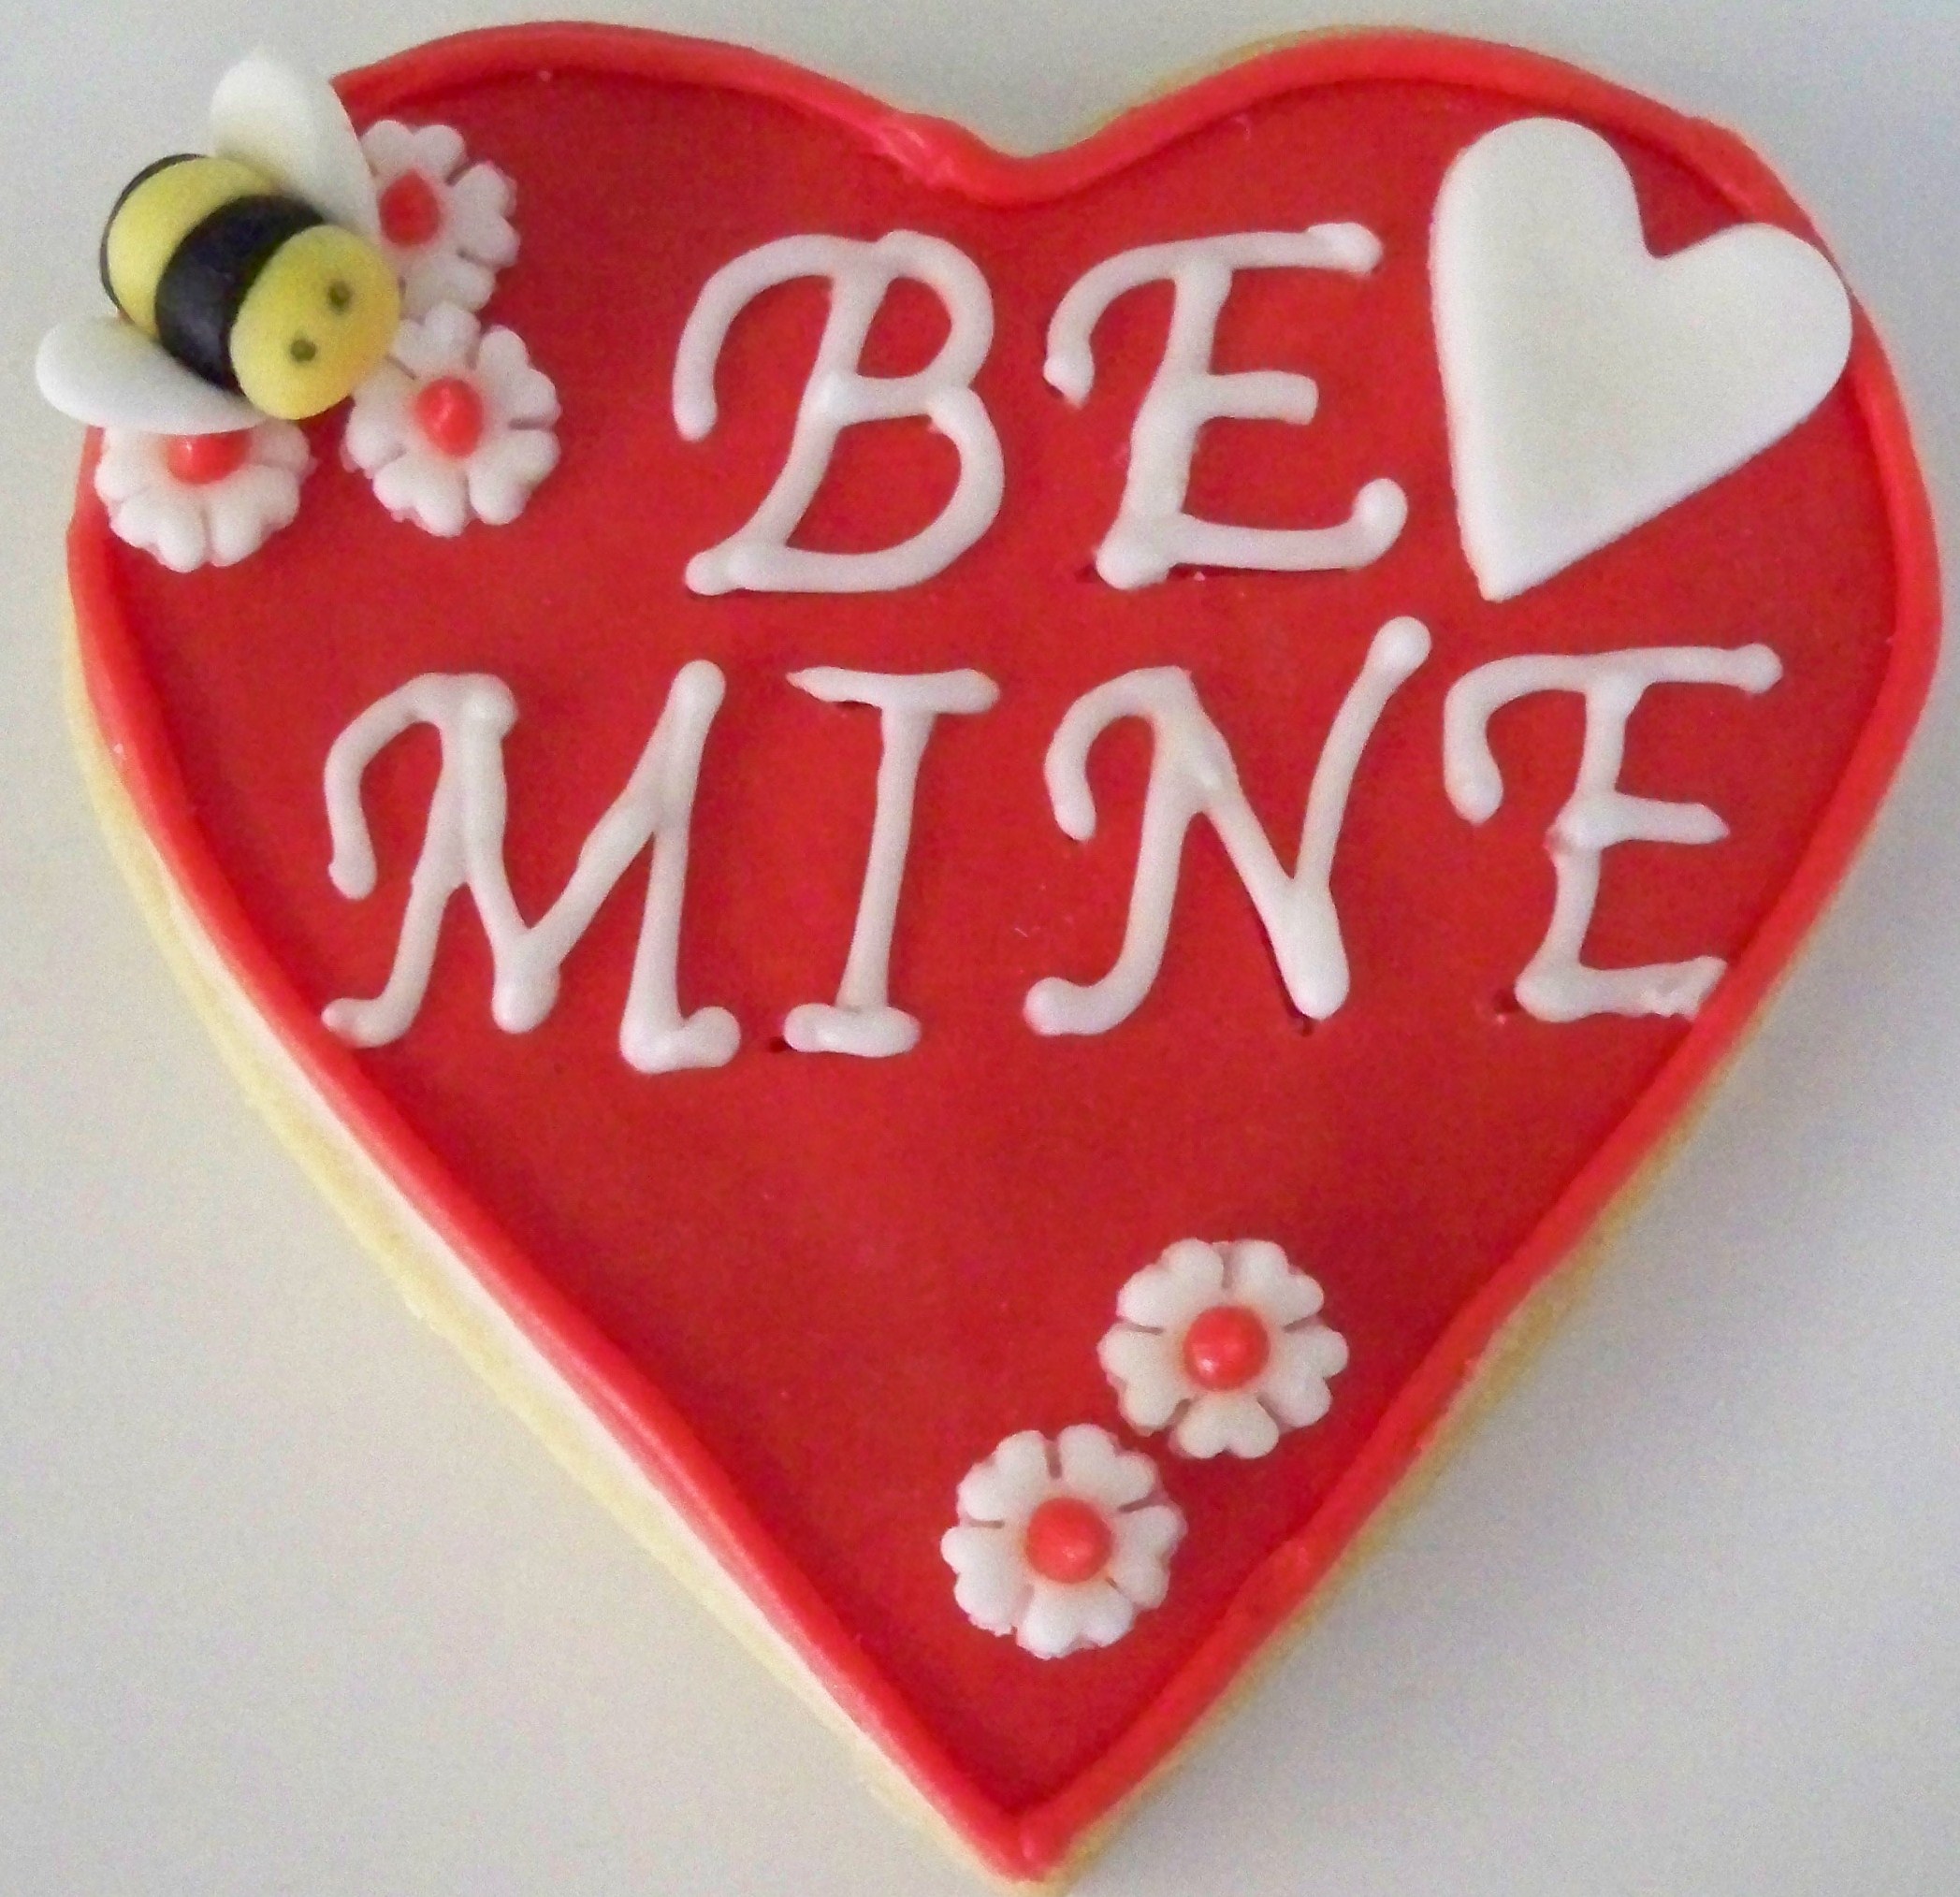 (3)Be Mine
